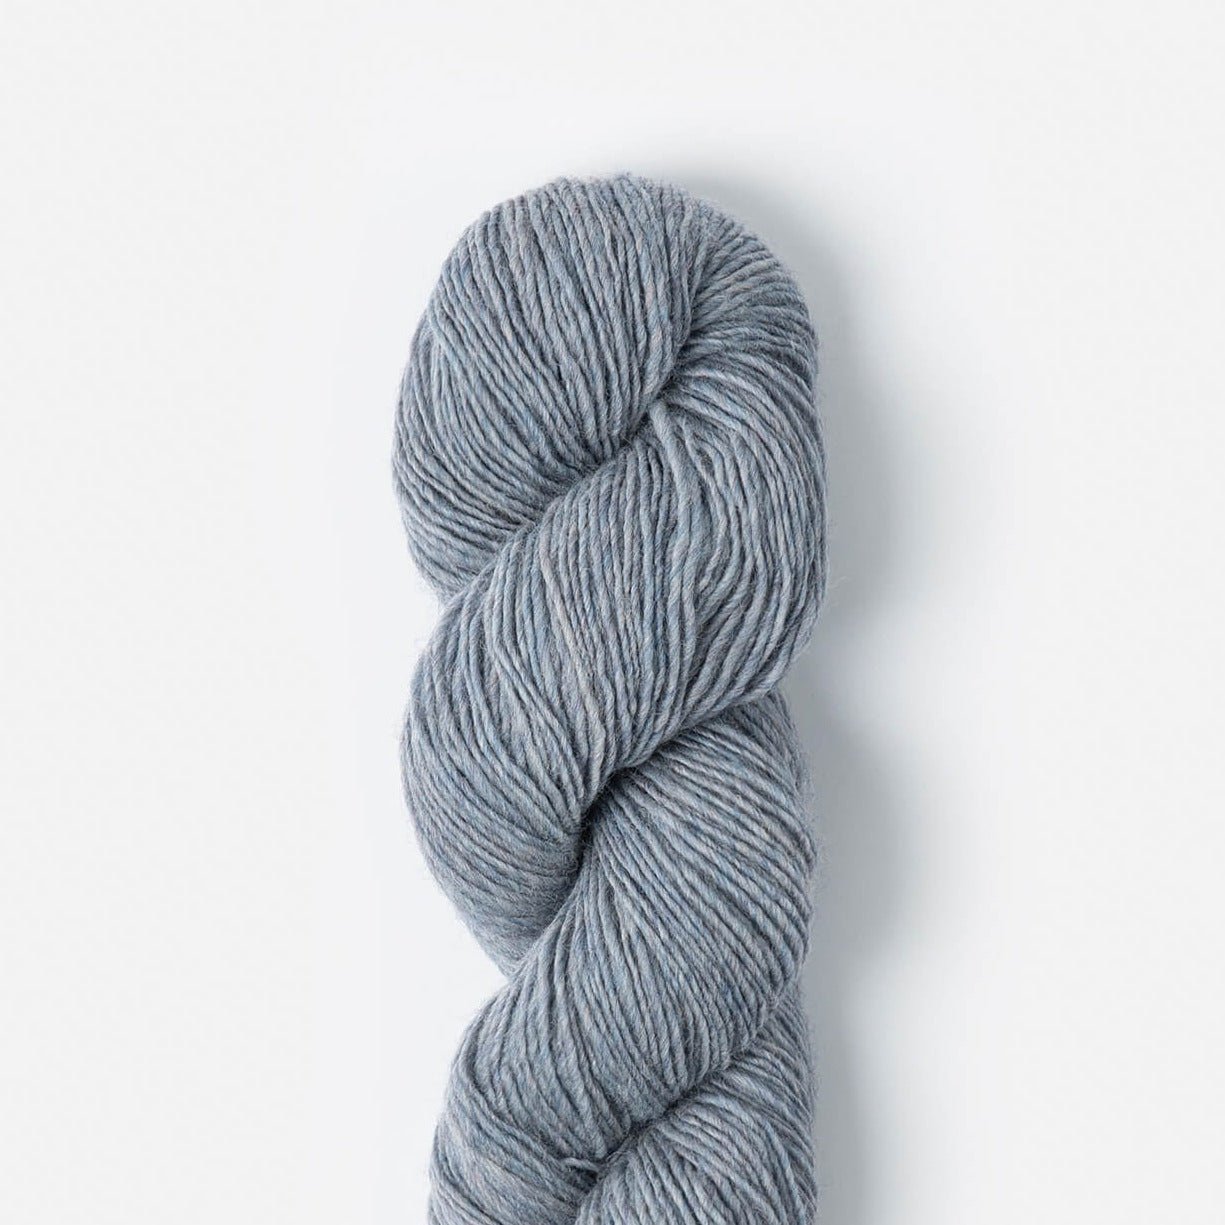 Tivoli Shawl Knitting Kit - Mary Pranica - 2324 Morning Frost - The Little Yarn Store